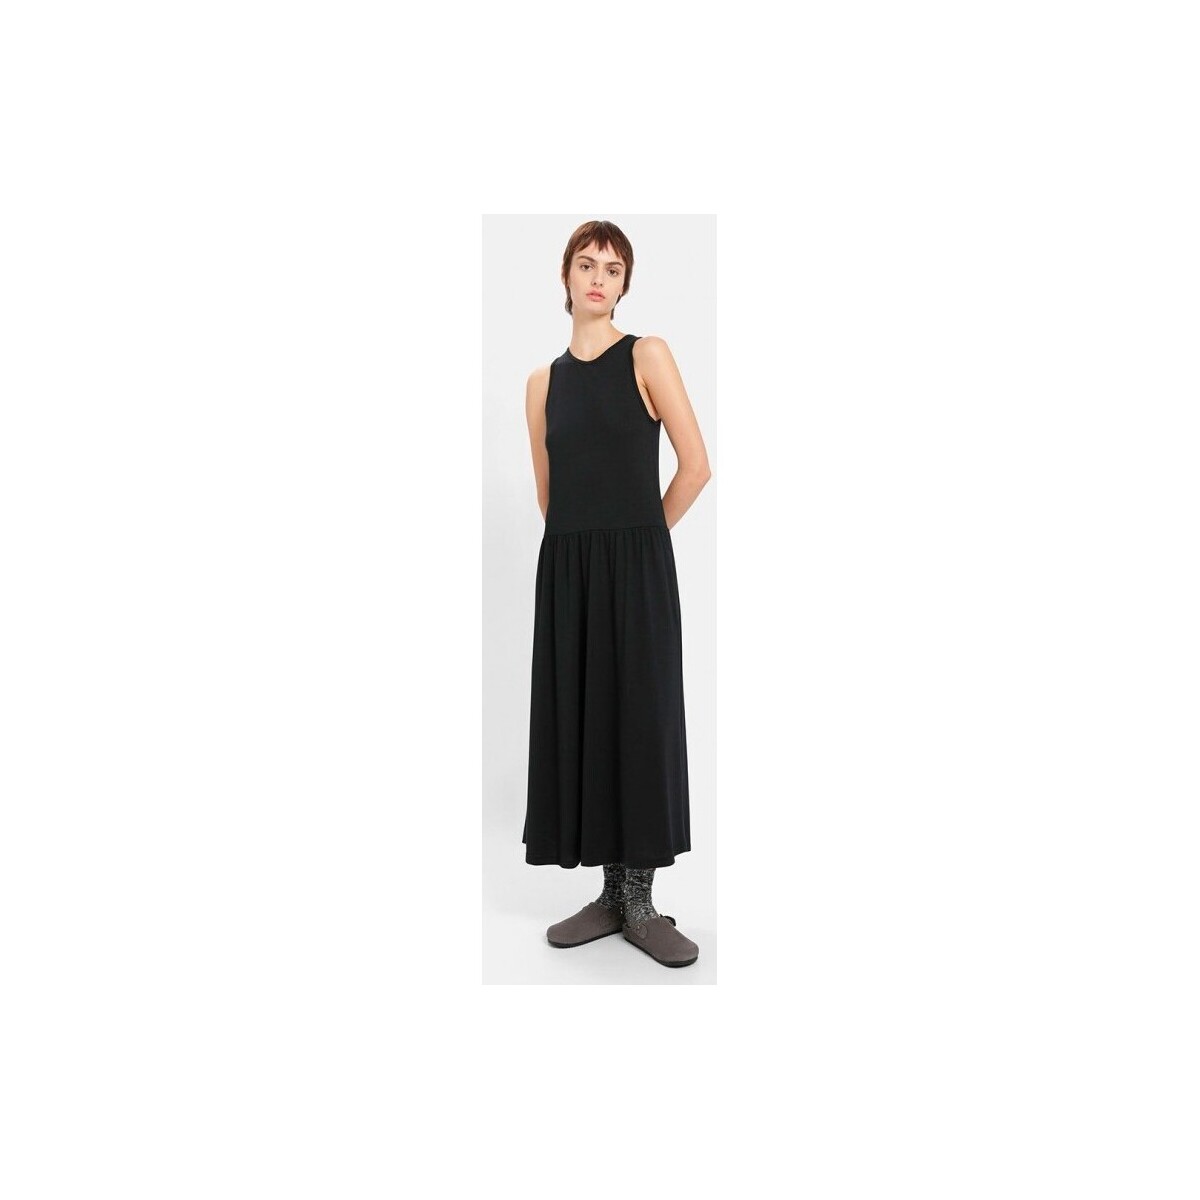 Vêtements Femme Robes Loreak Mendian Loreak Deslaika Dress Black Multicolore